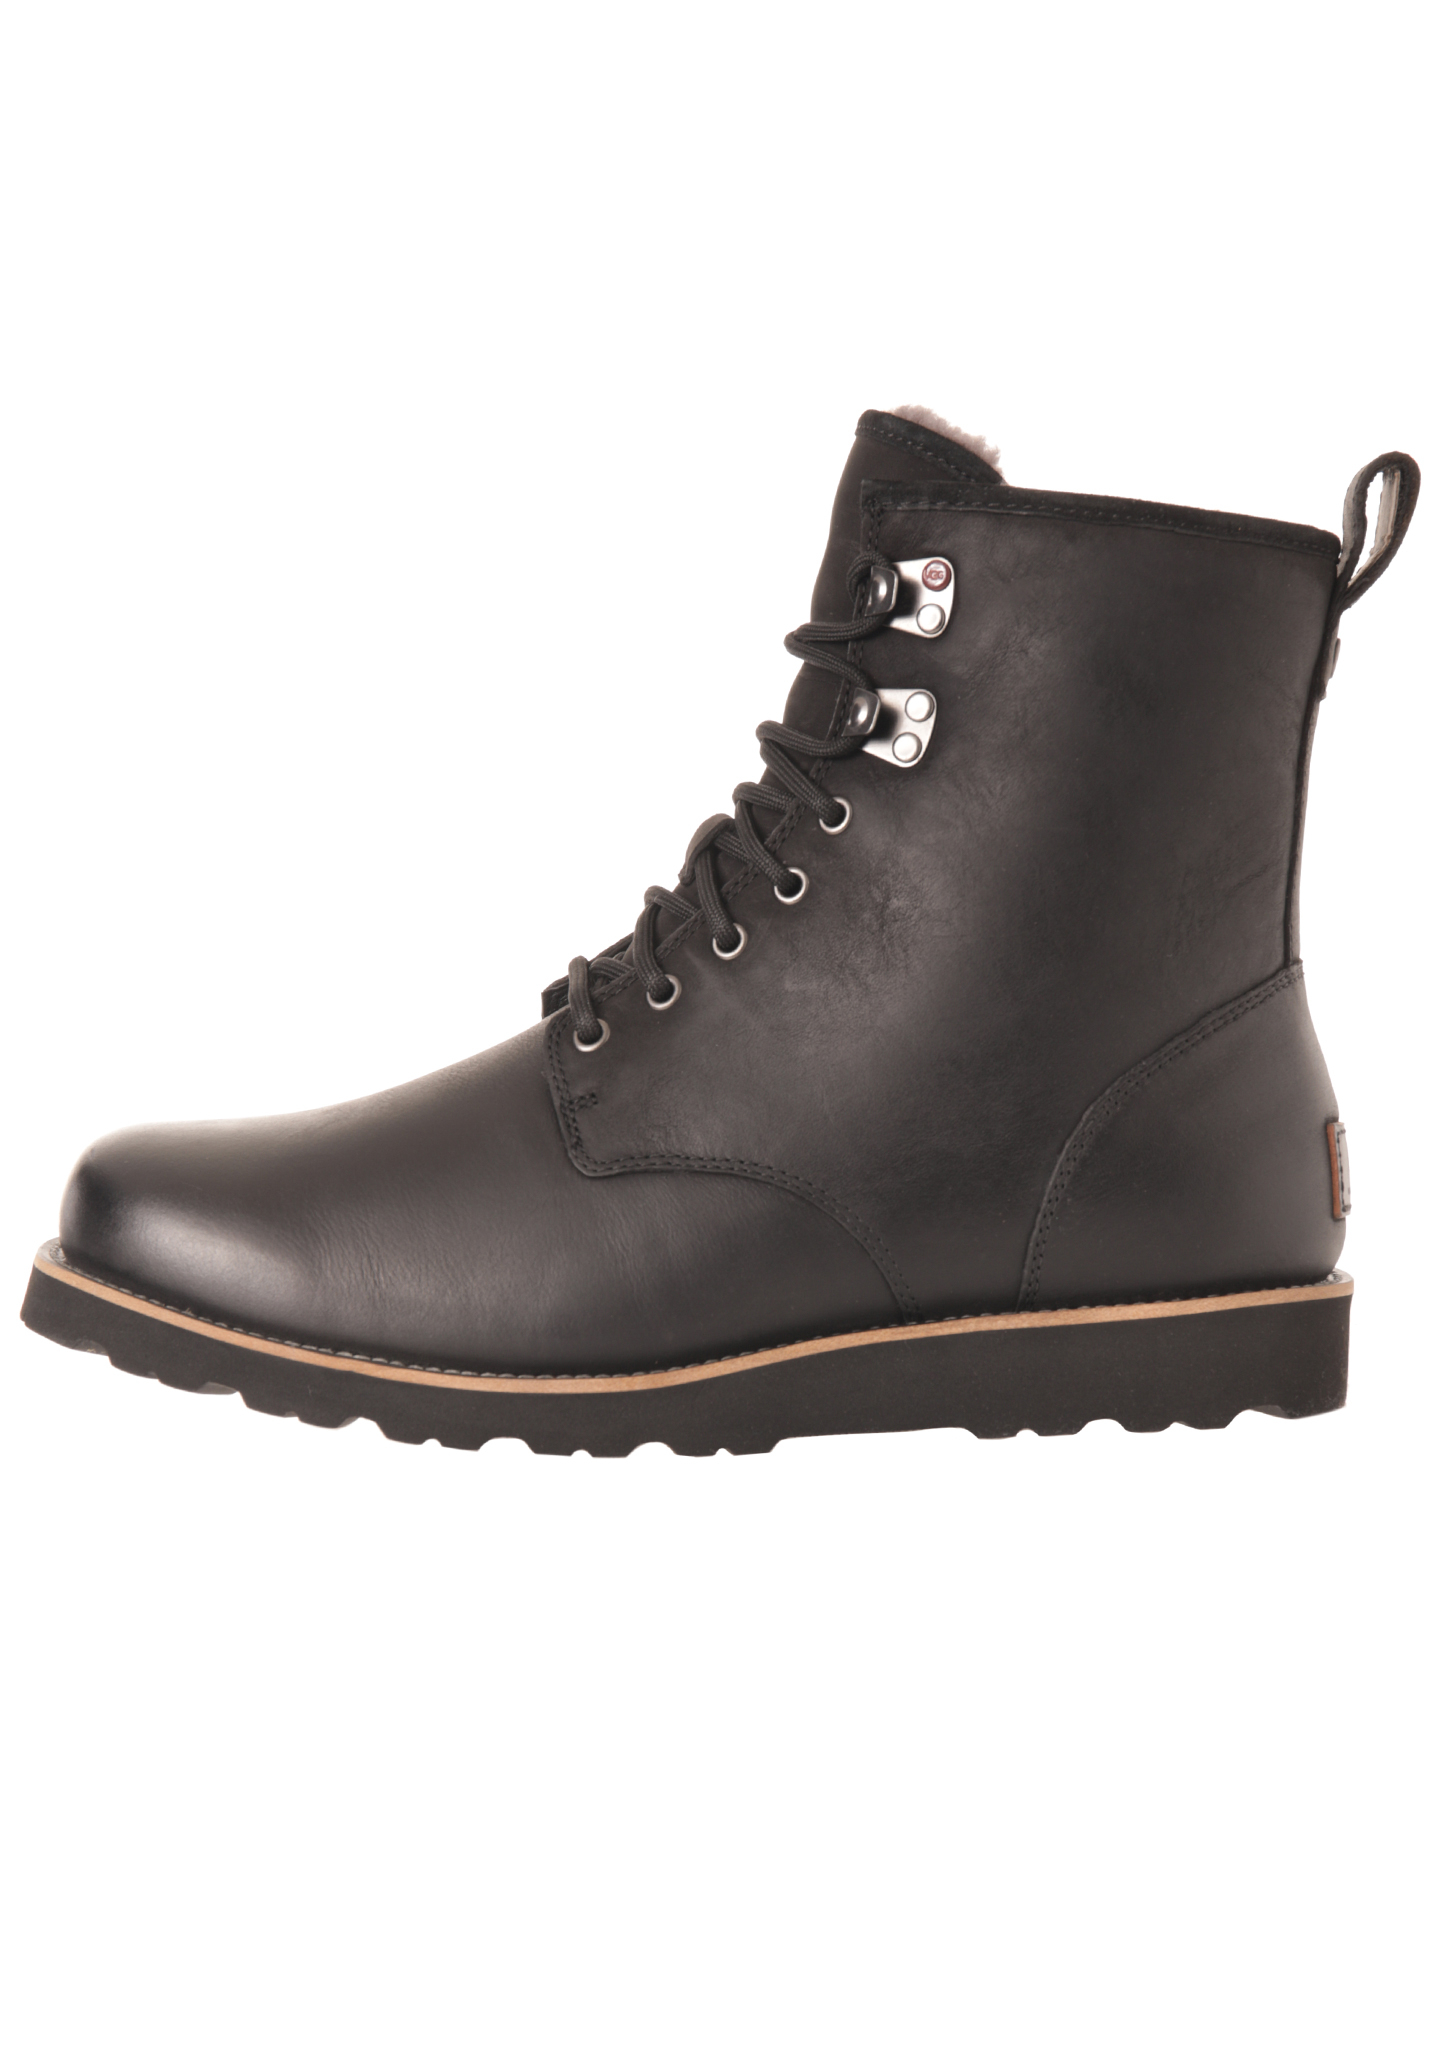 Ugg Hannen Tl Boots black 45